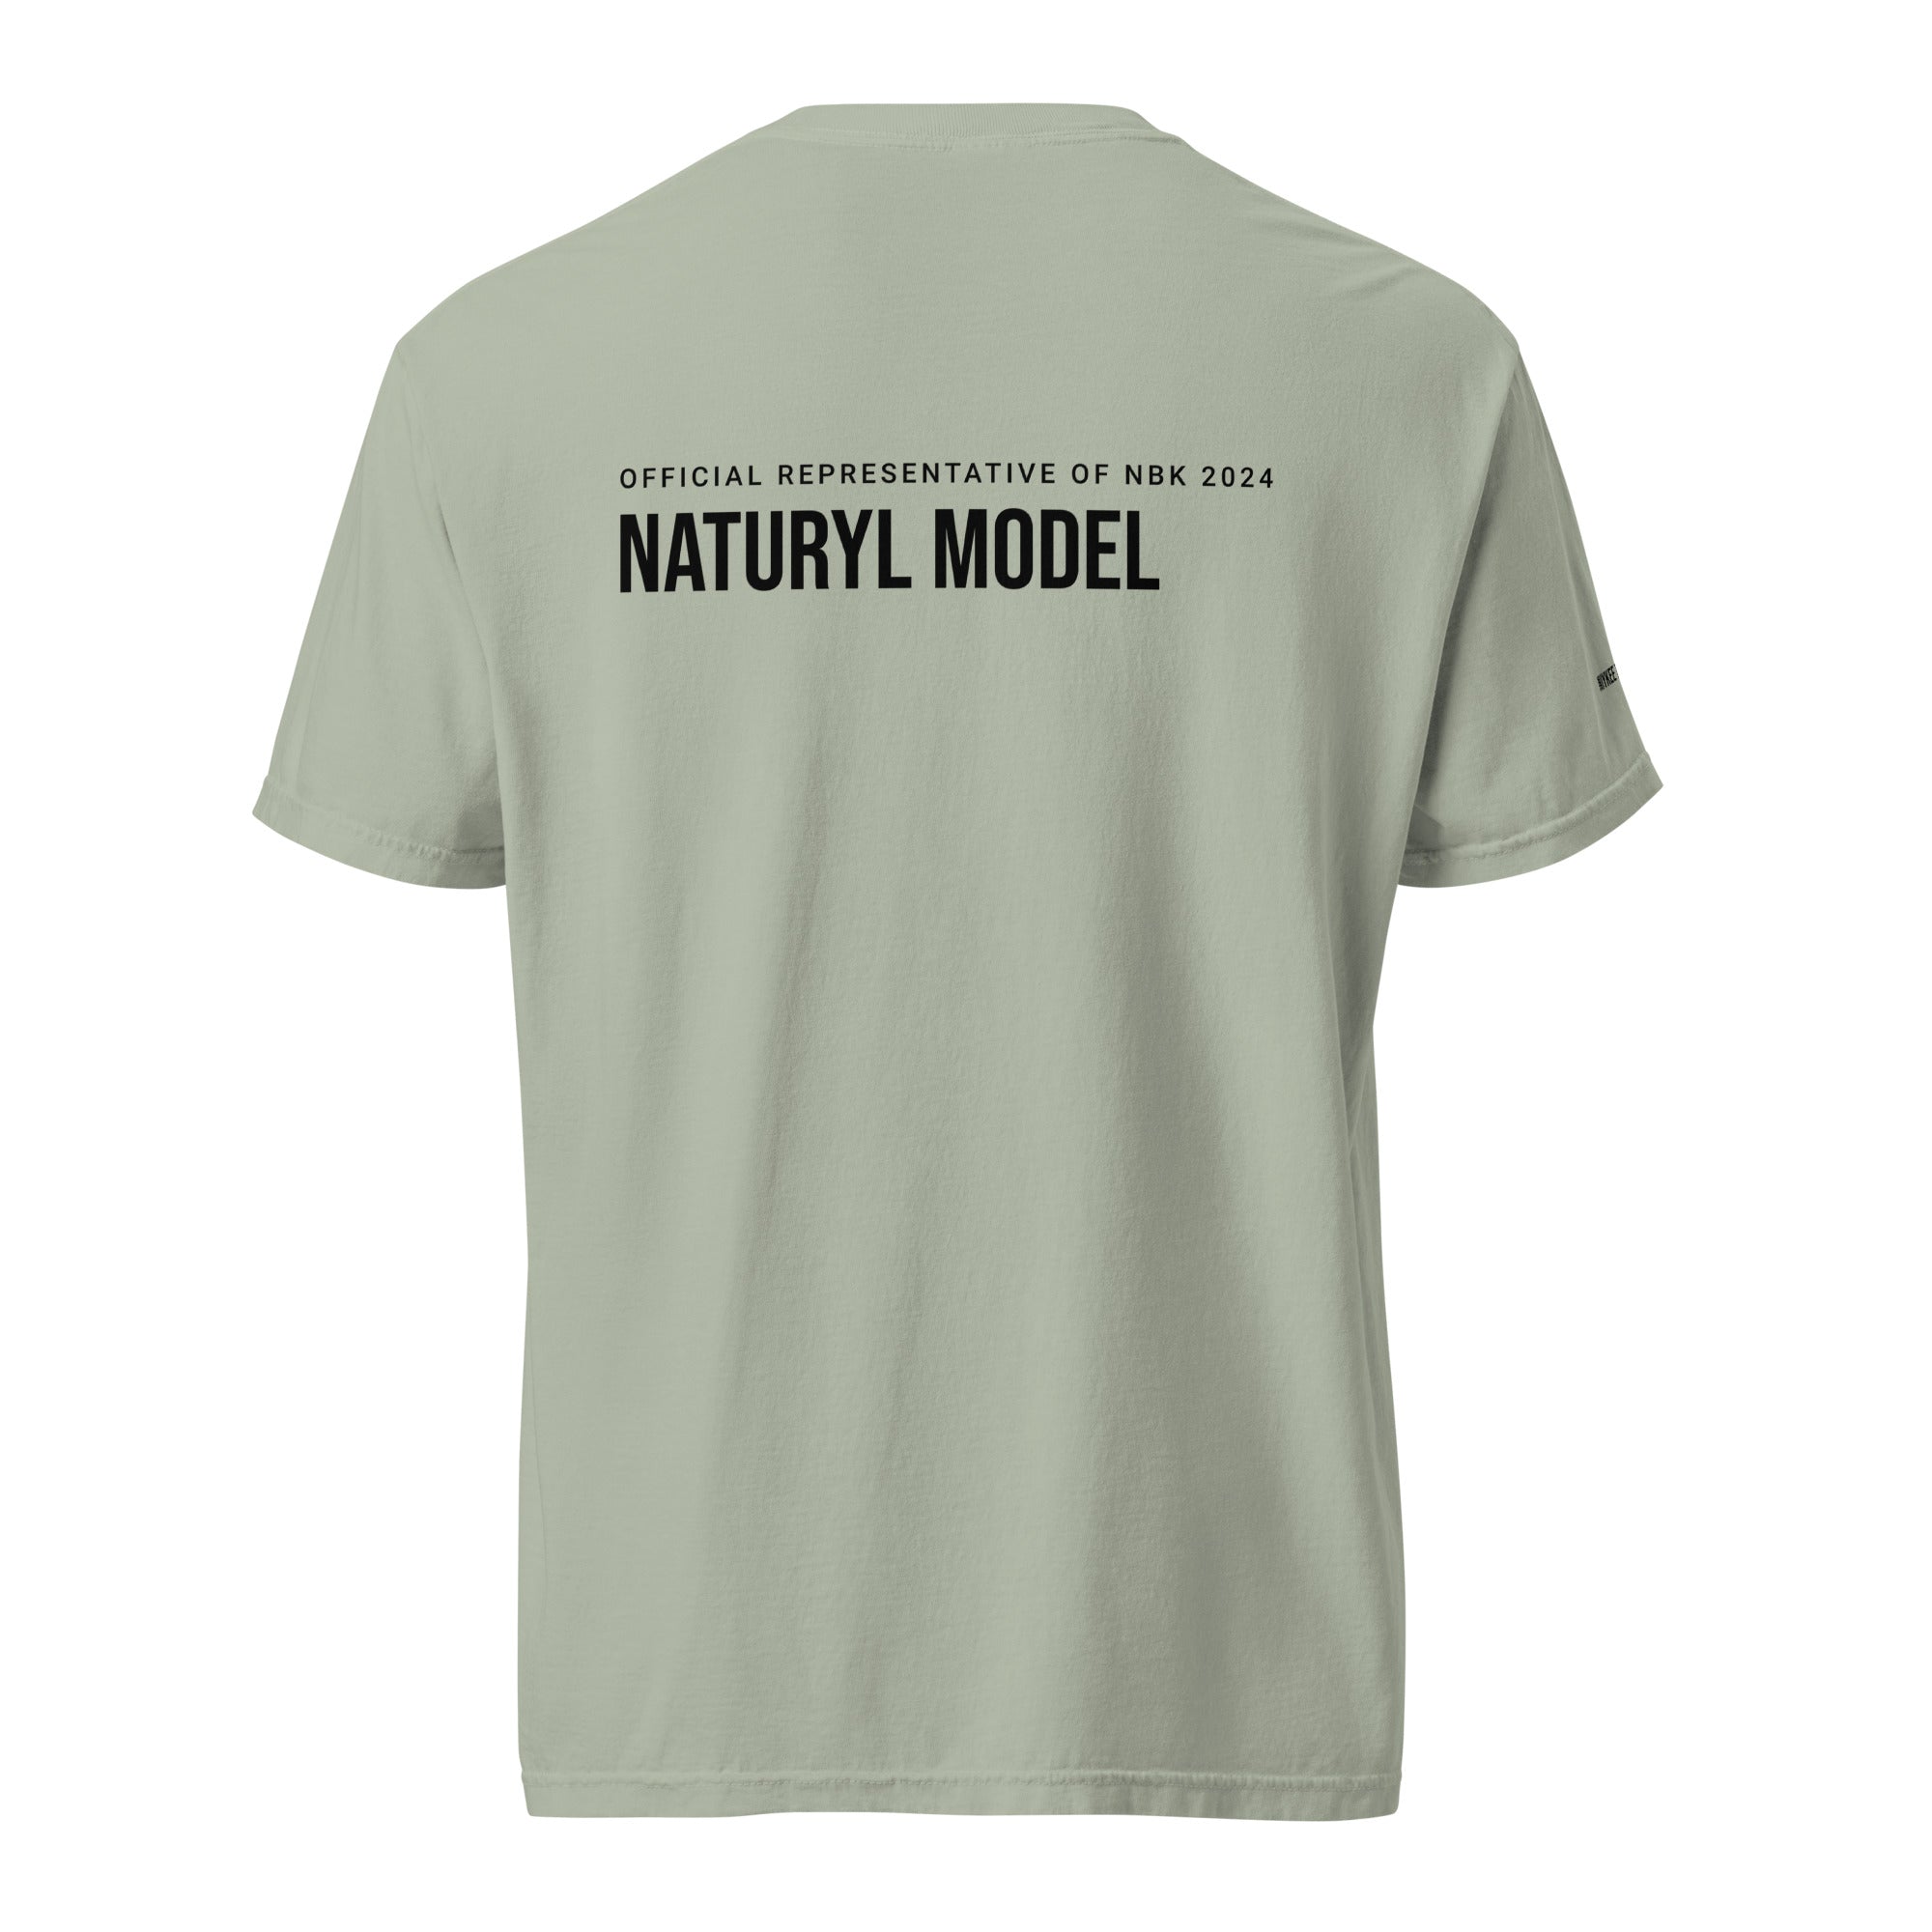 THE NATURYL MODEL N24 TEE